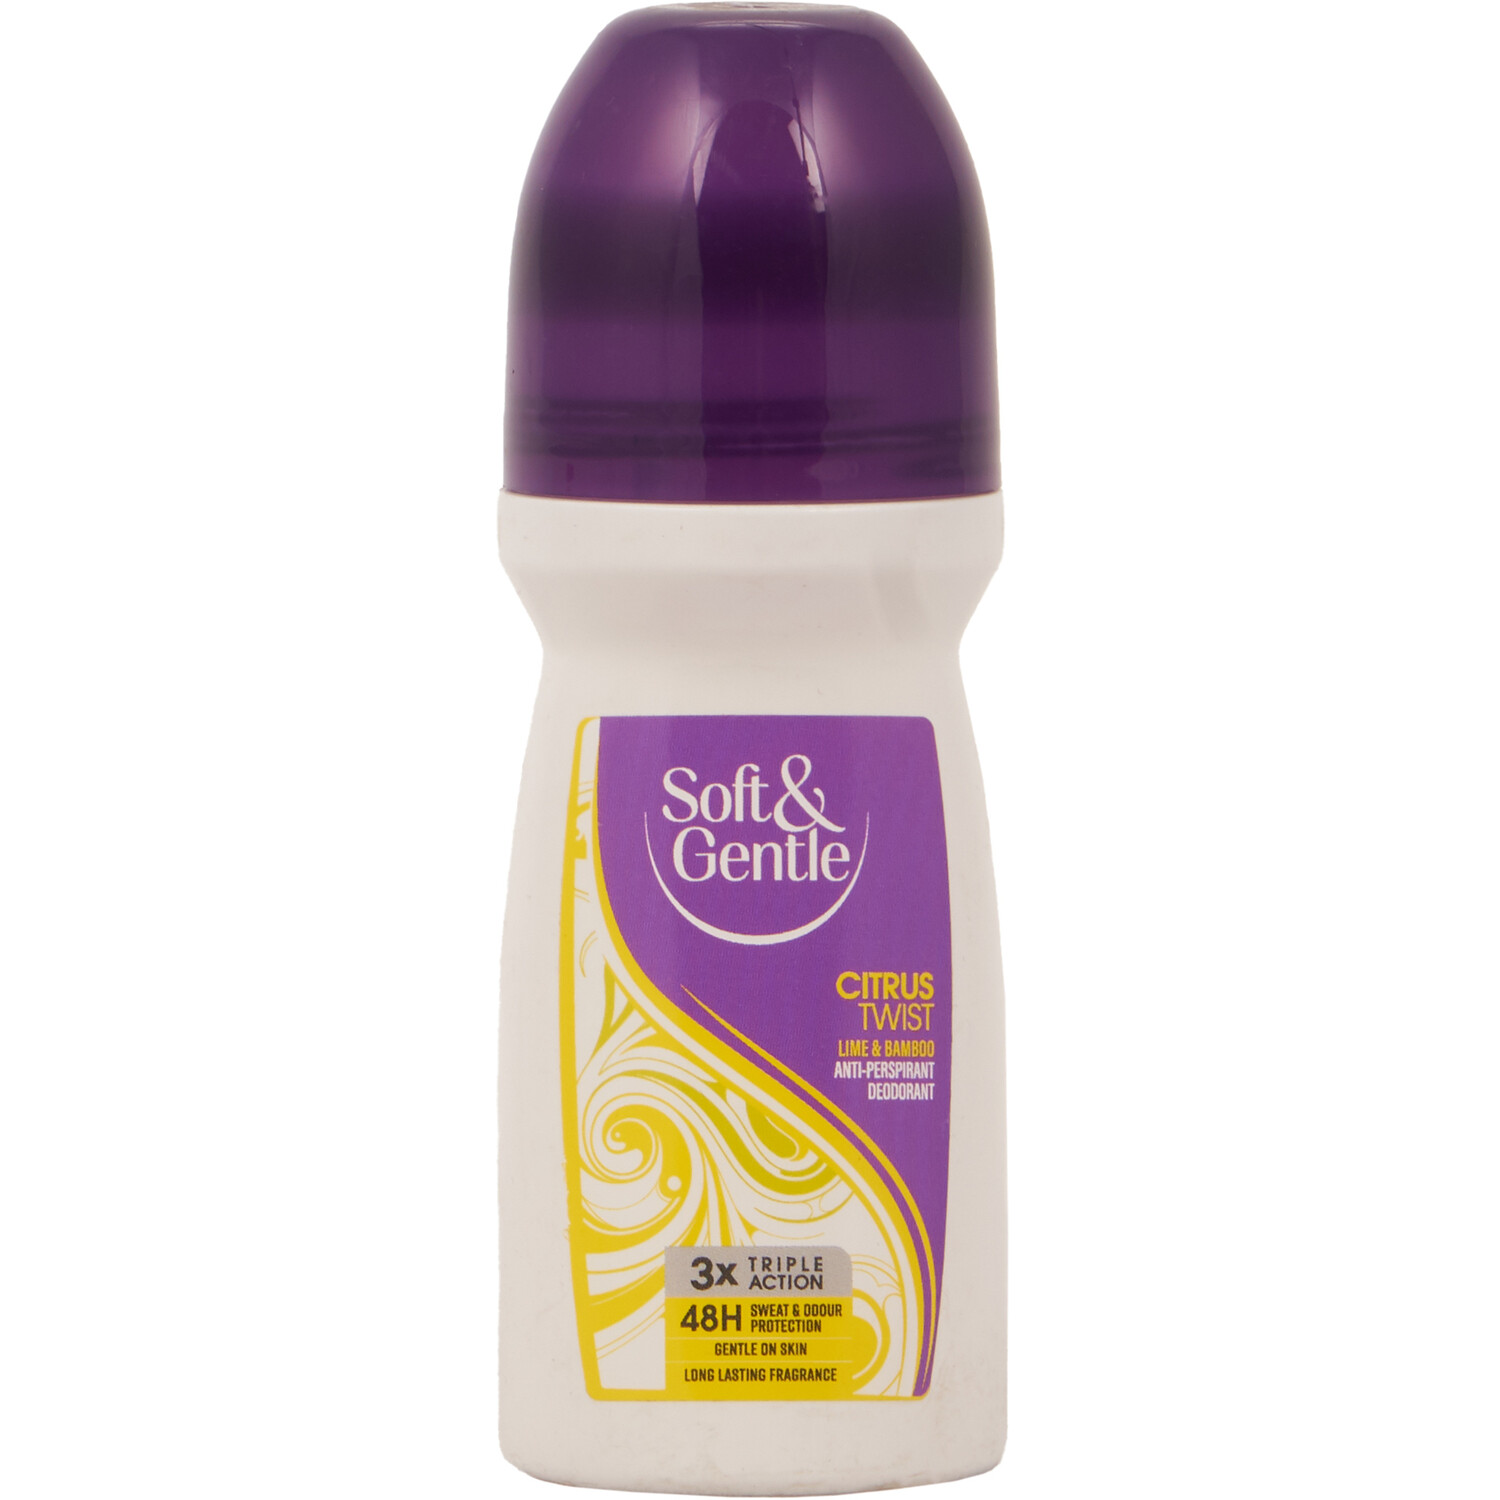 Soft & Gentle Citrus Twist Roll-On Anti-Perspirant Deodorant - Purple Image 1